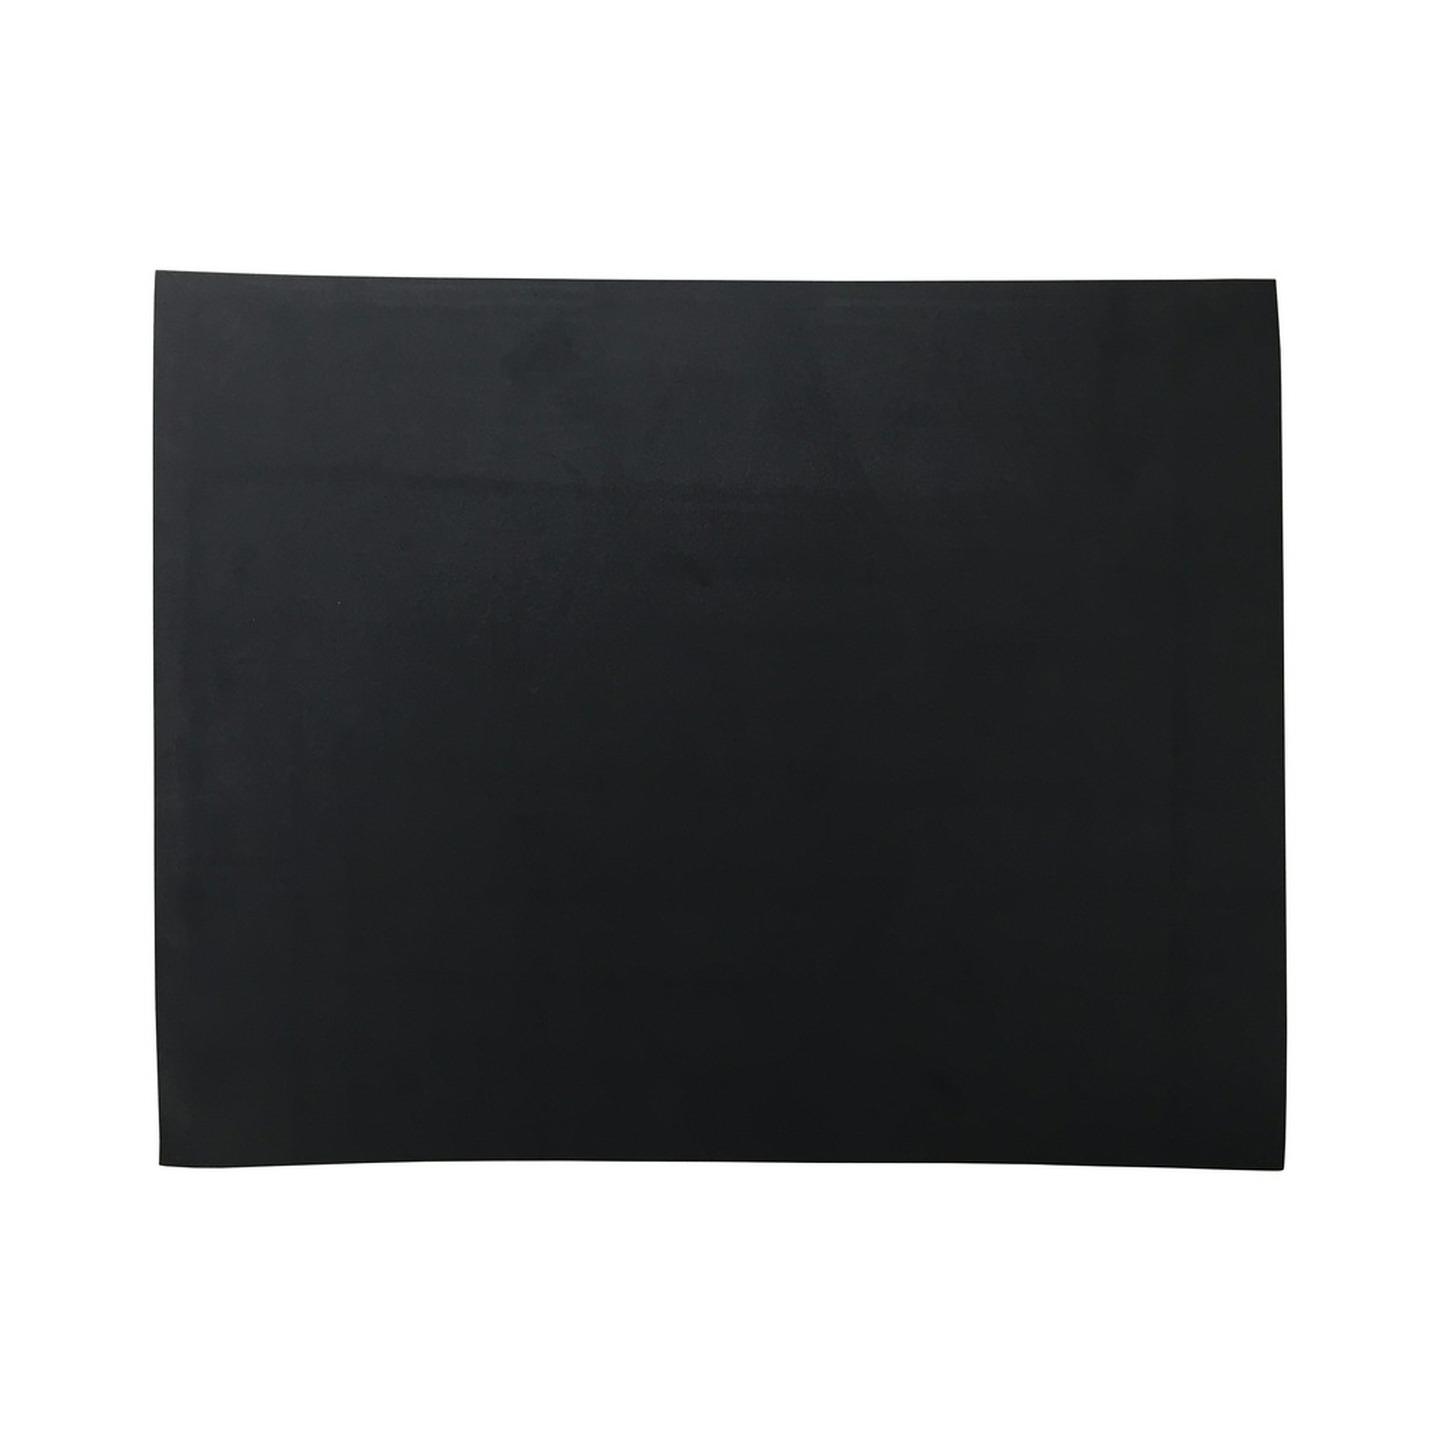 1mm Black EVA Foam Sheet 50cm x 40cm